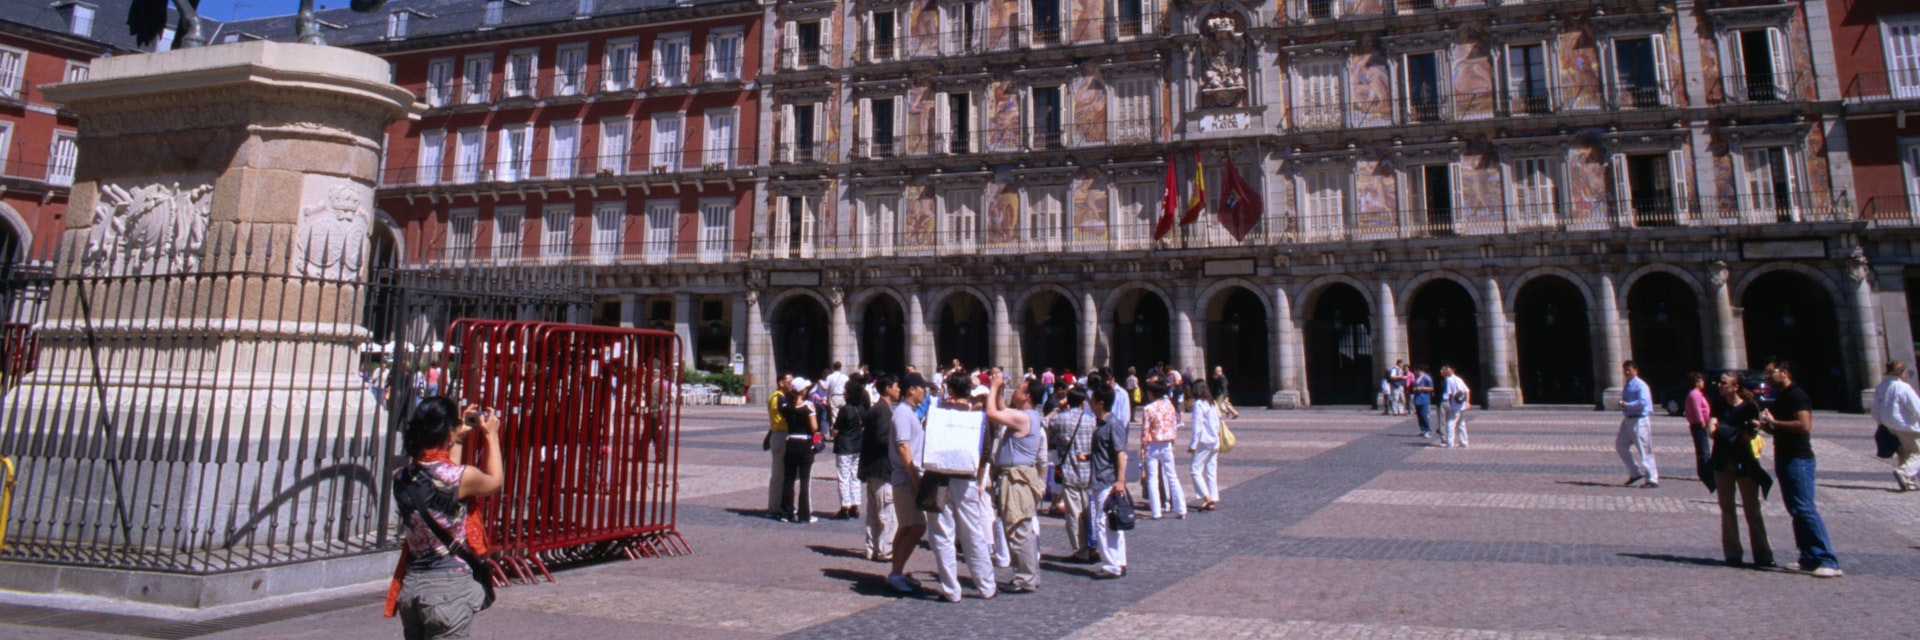 Statue of Felipe III and Real Casa de la Panaderia house on Plaza Mayor, Sol.